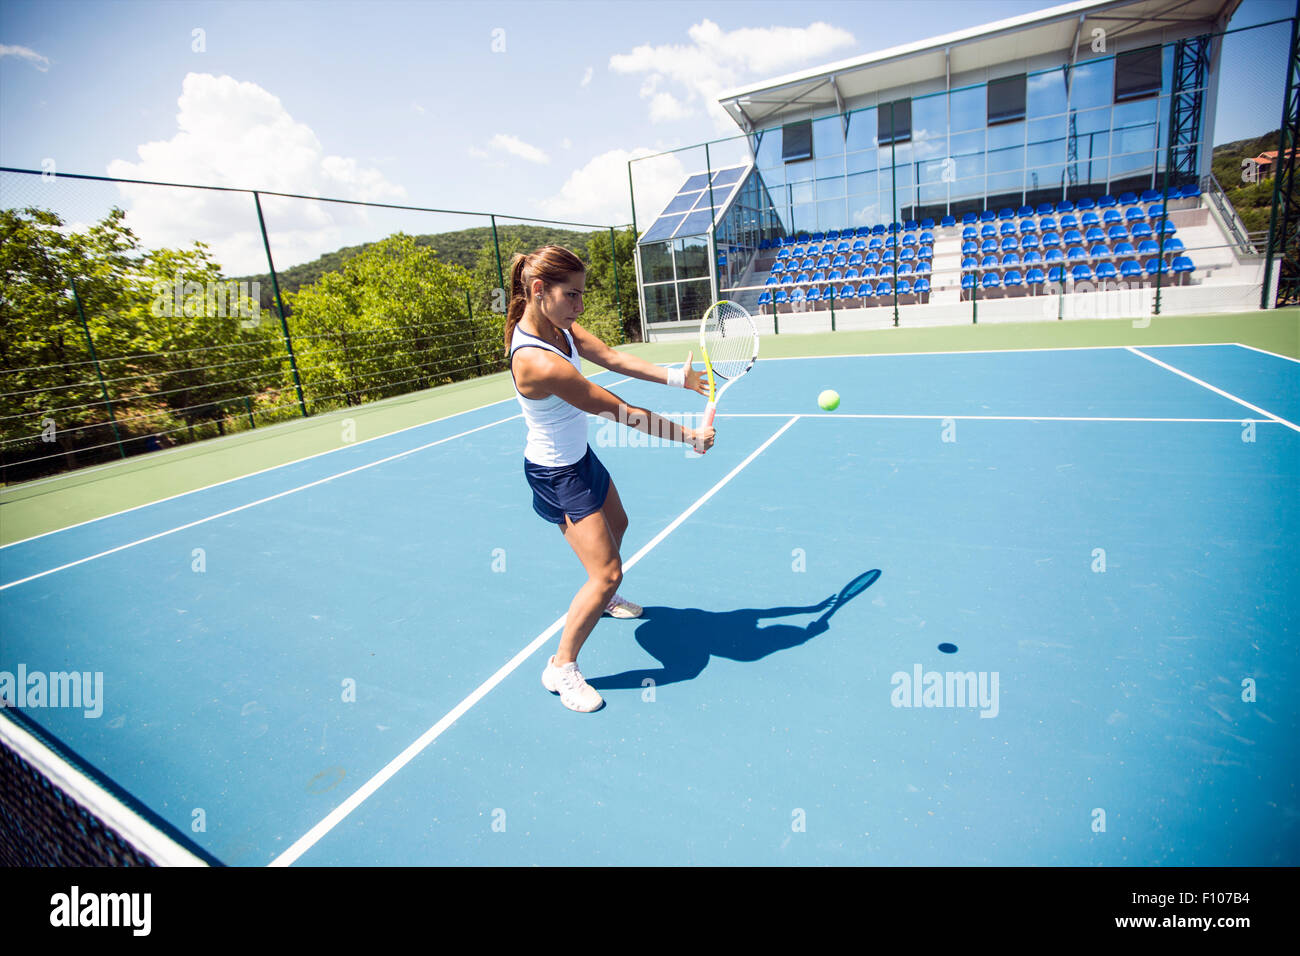 Femmina giocatore di tennis di eseguire un drop shot su una bella corte blu Foto Stock